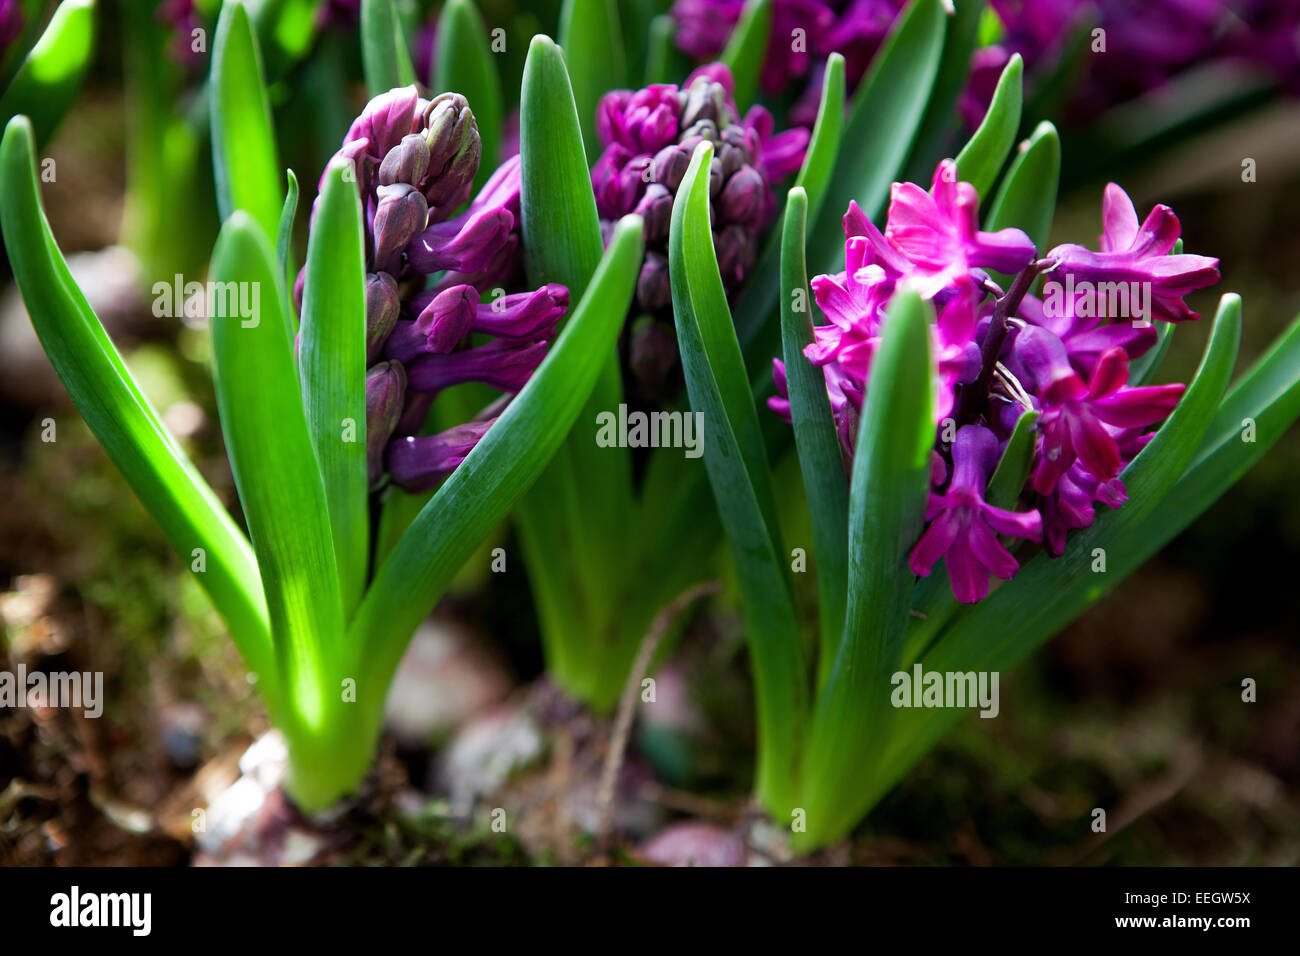 Planted hyacinth bulbs Stock Photo